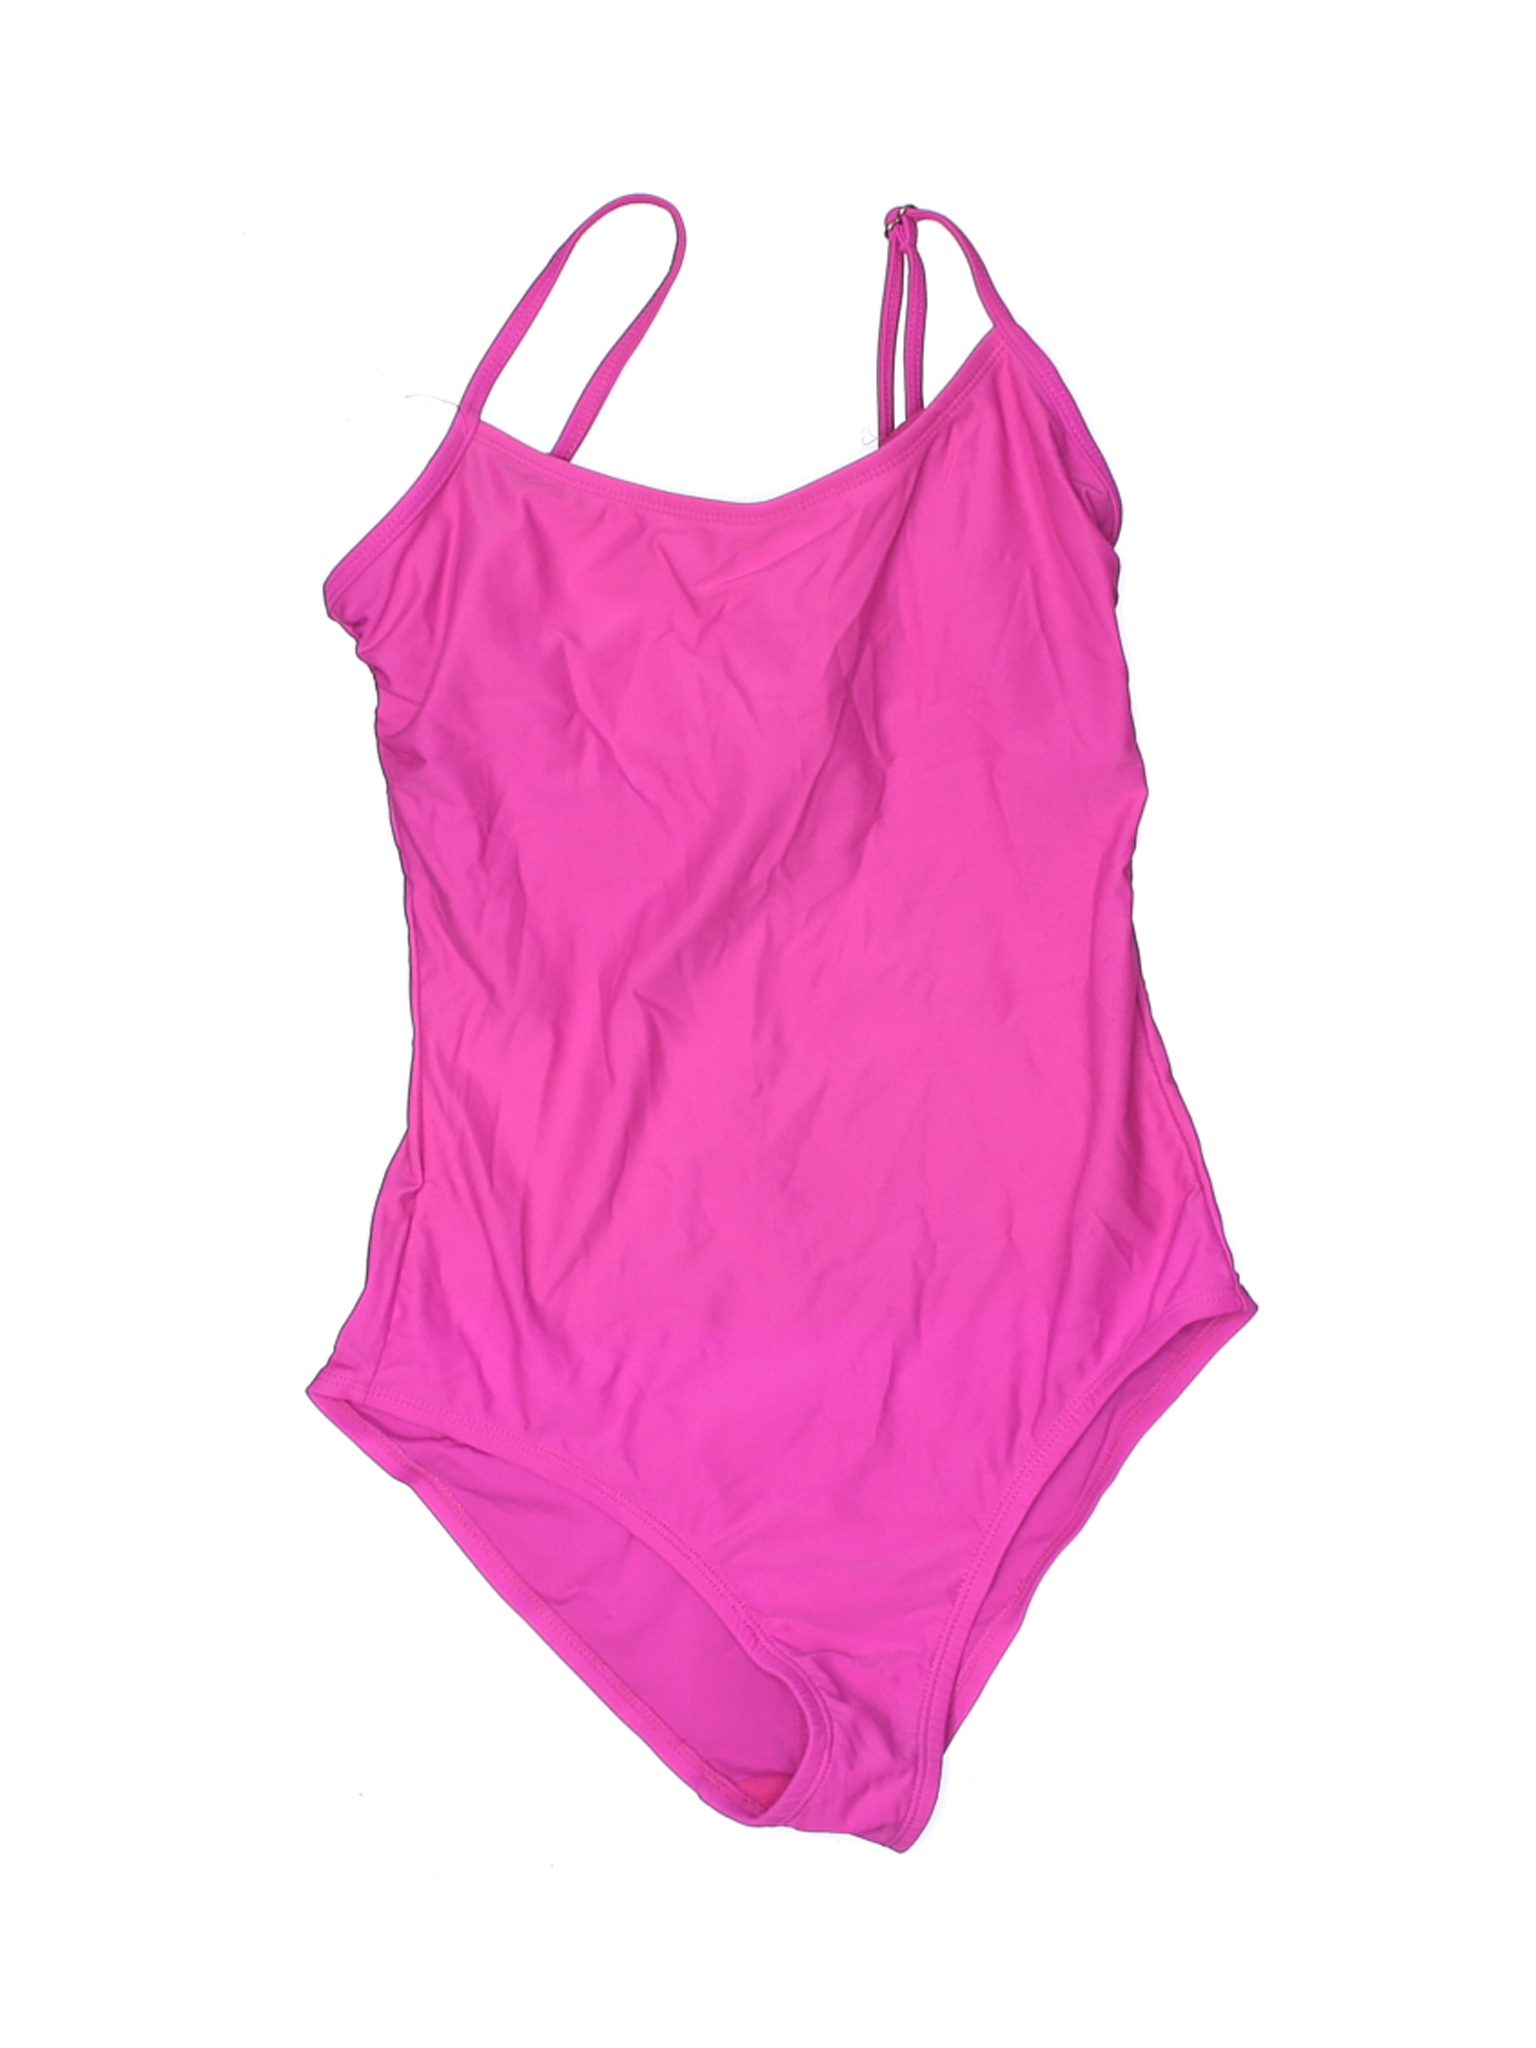 Catalina Women Pink One Piece Swimsuit S | eBay